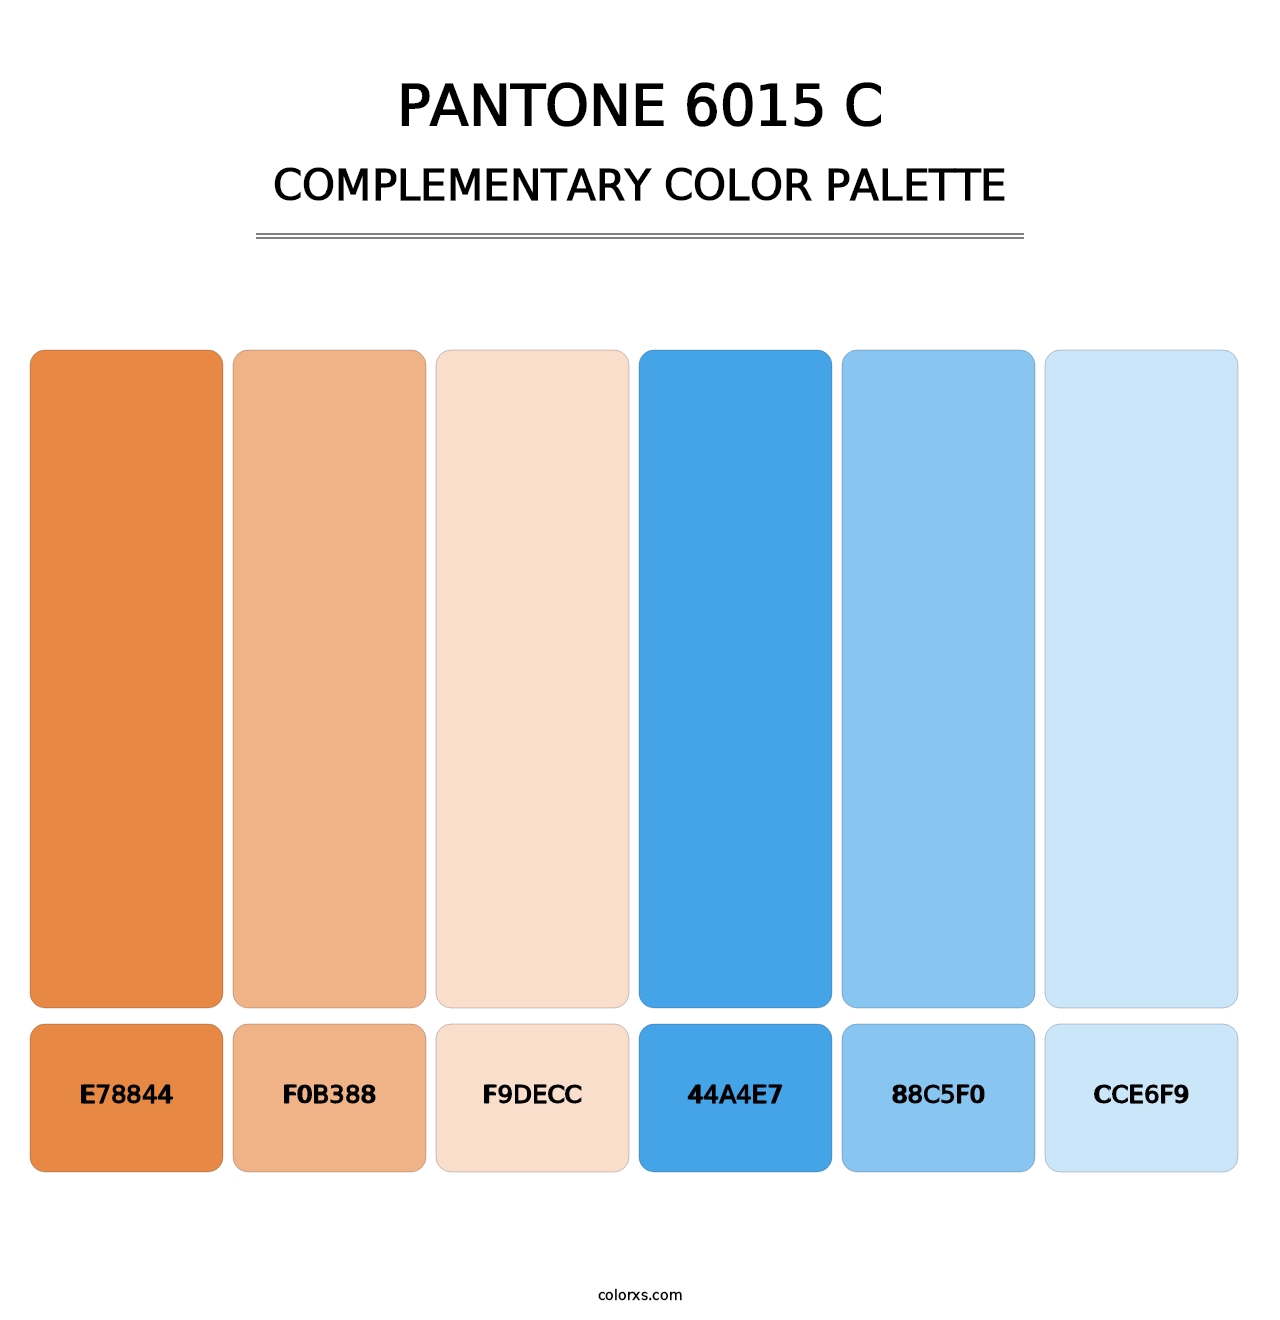 PANTONE 6015 C - Complementary Color Palette